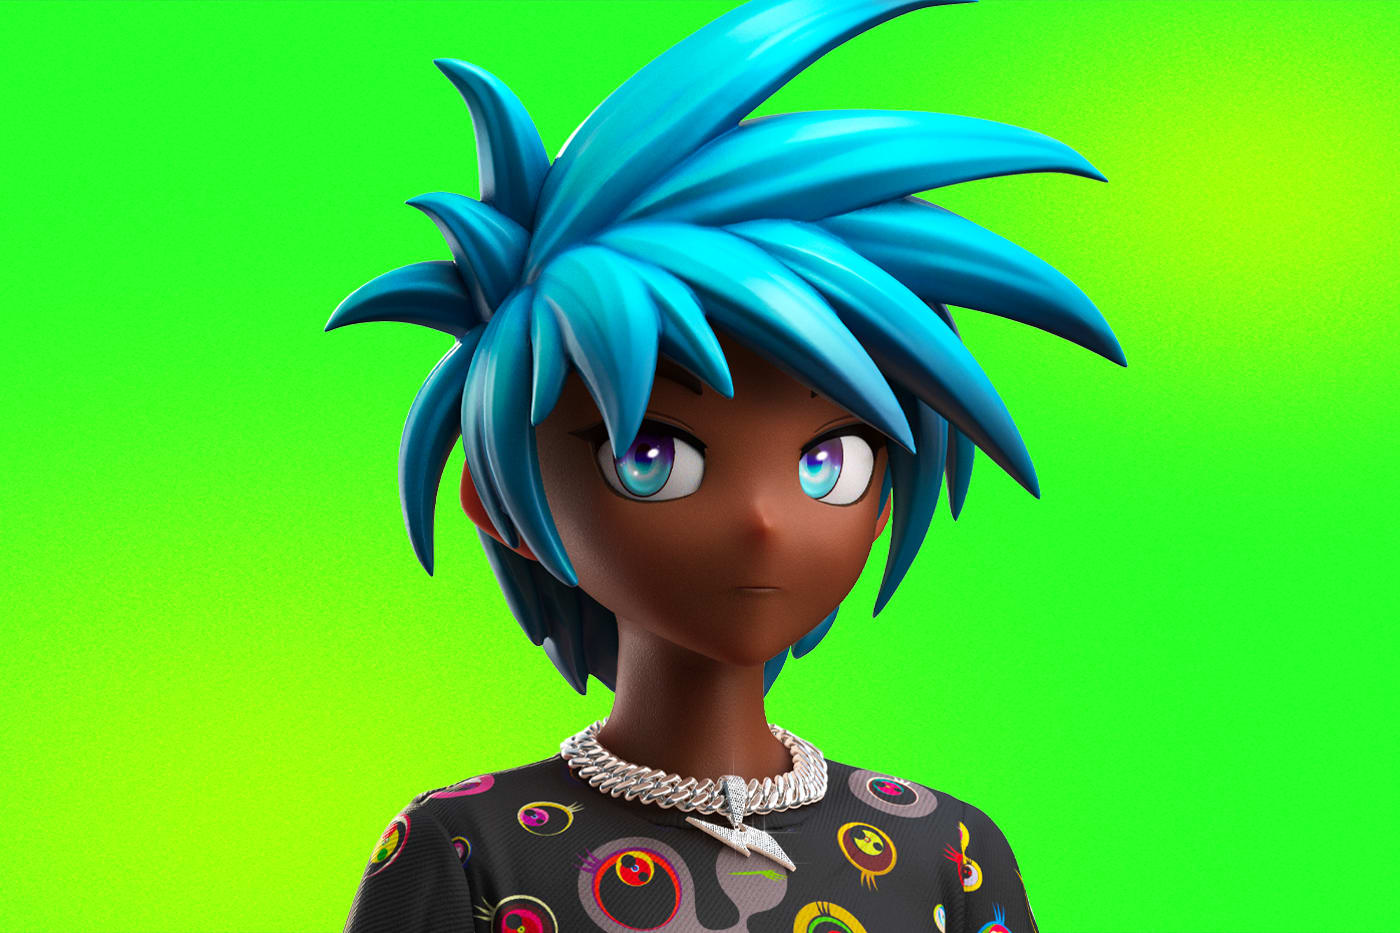 An avatar with blue hair is shown.